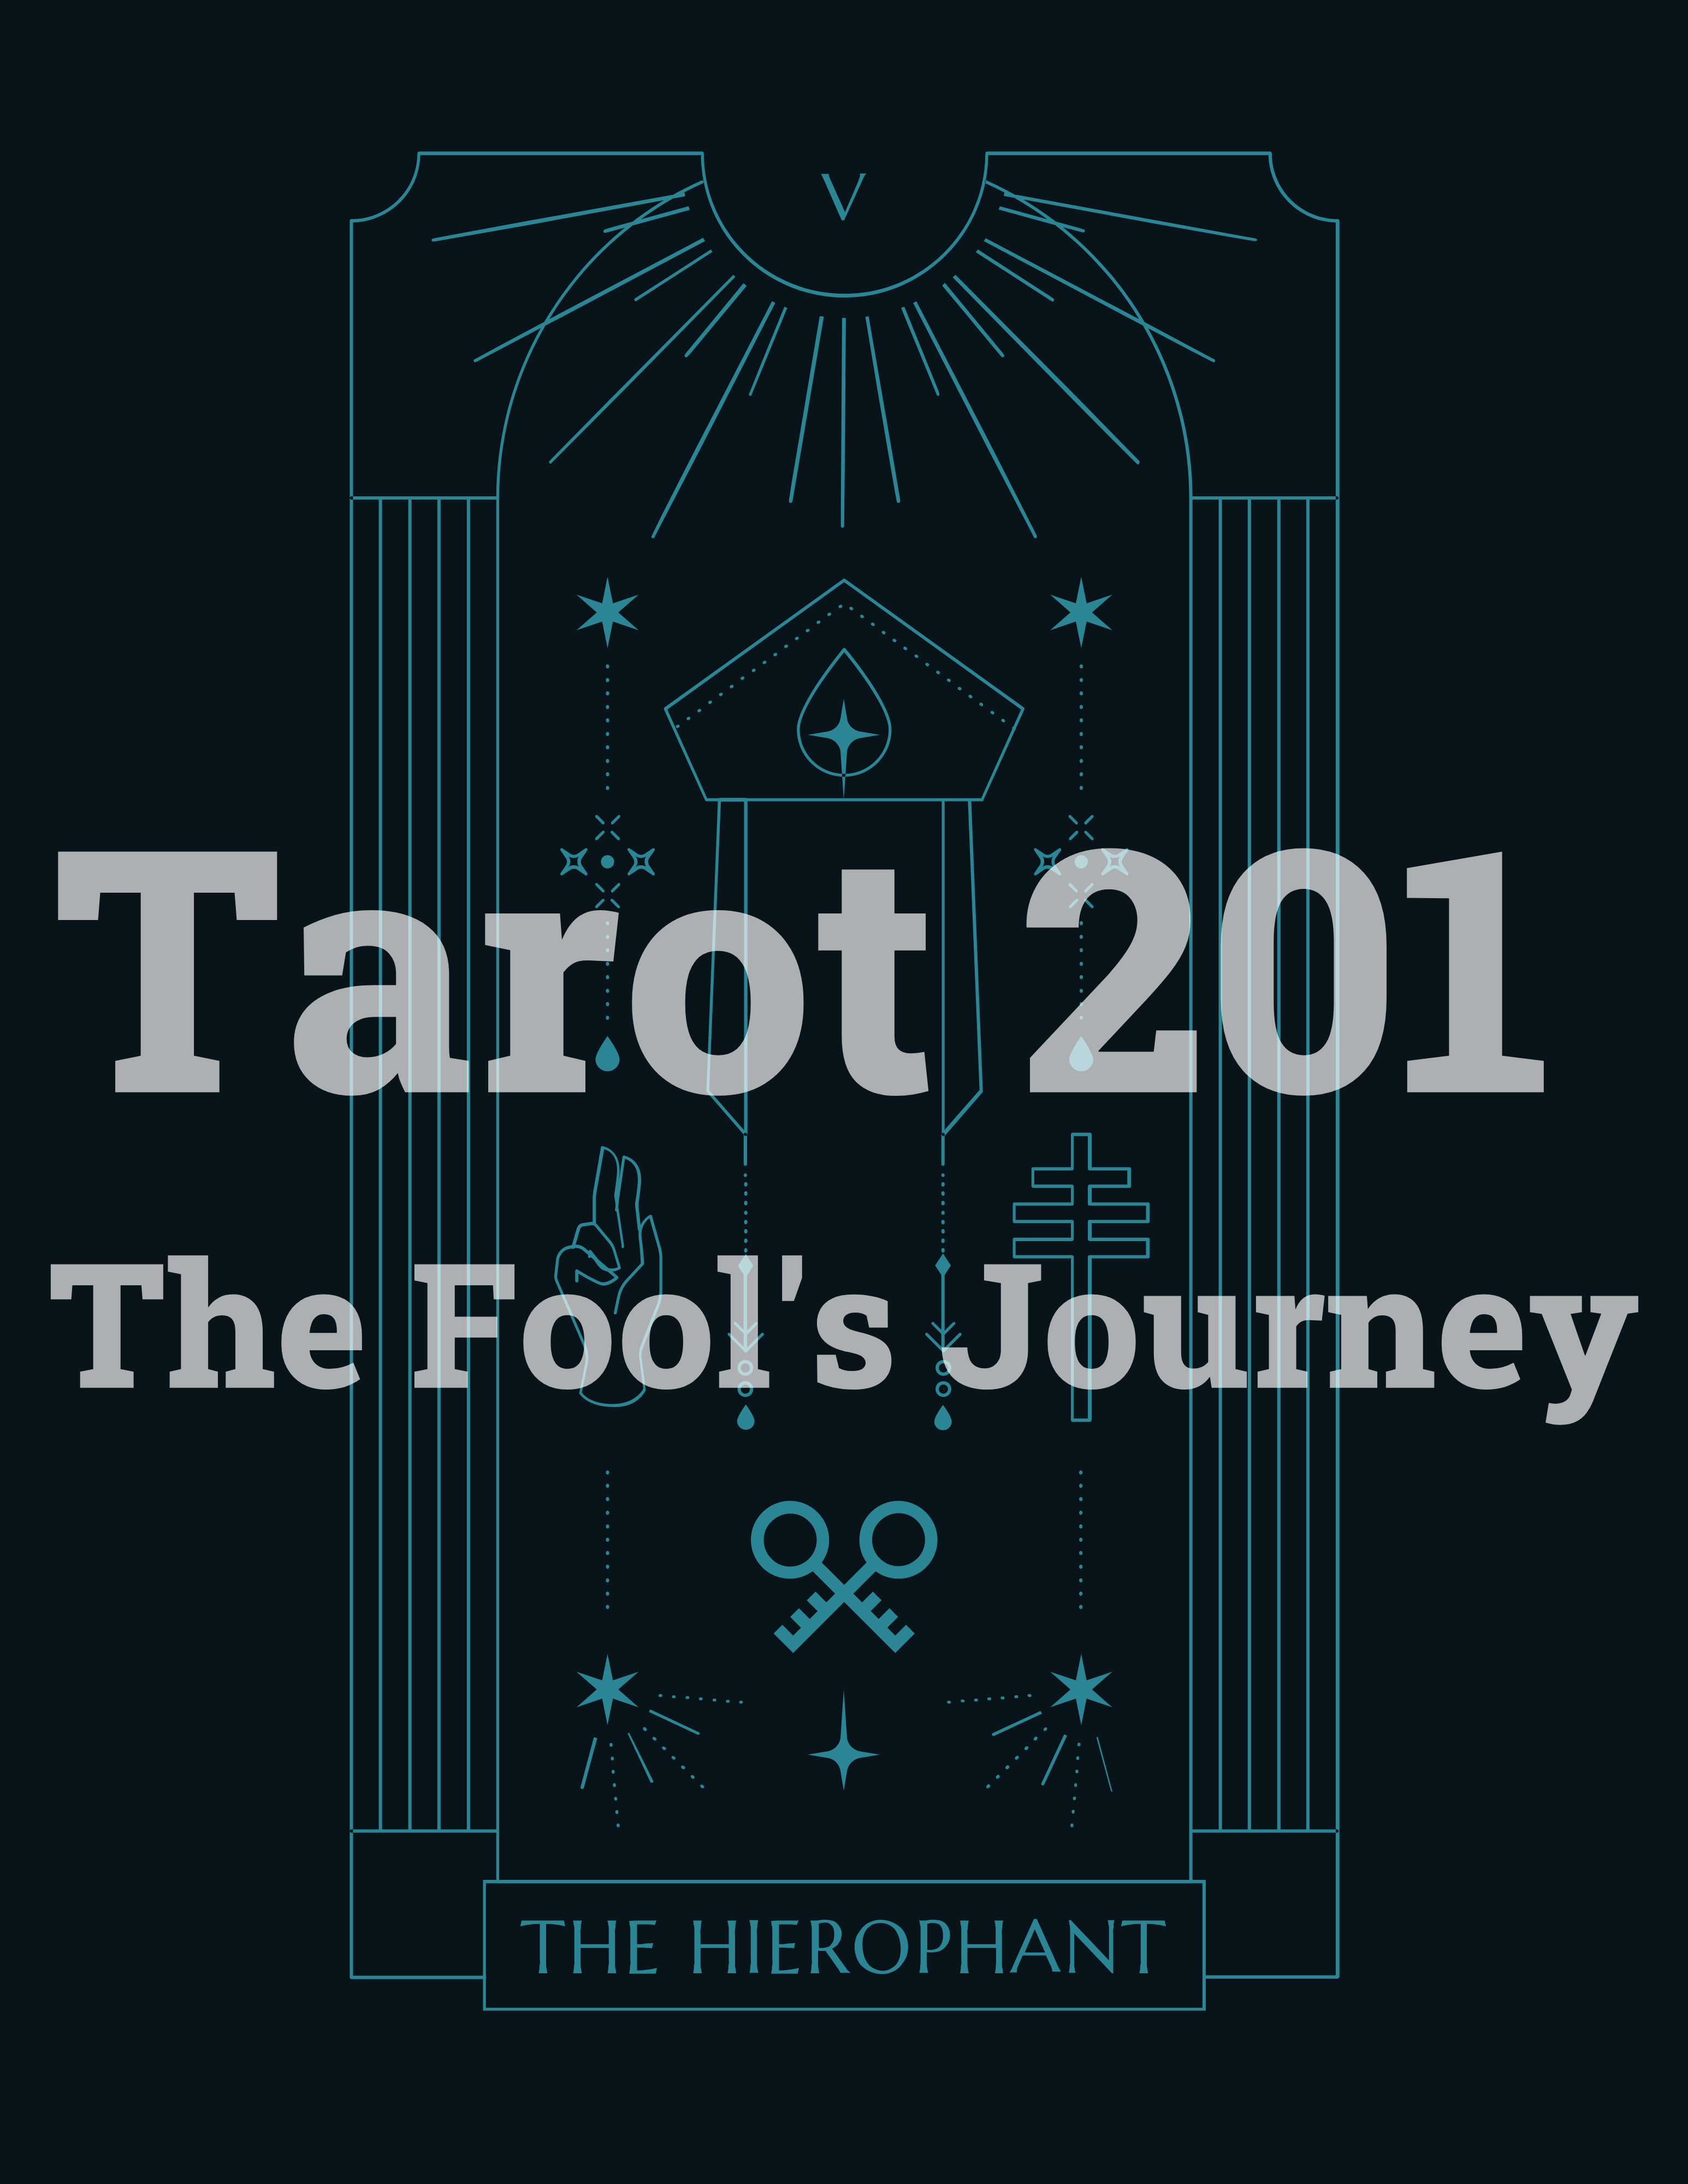 Tarot Card Tarot 201 The Fool's Journey The Hierophant